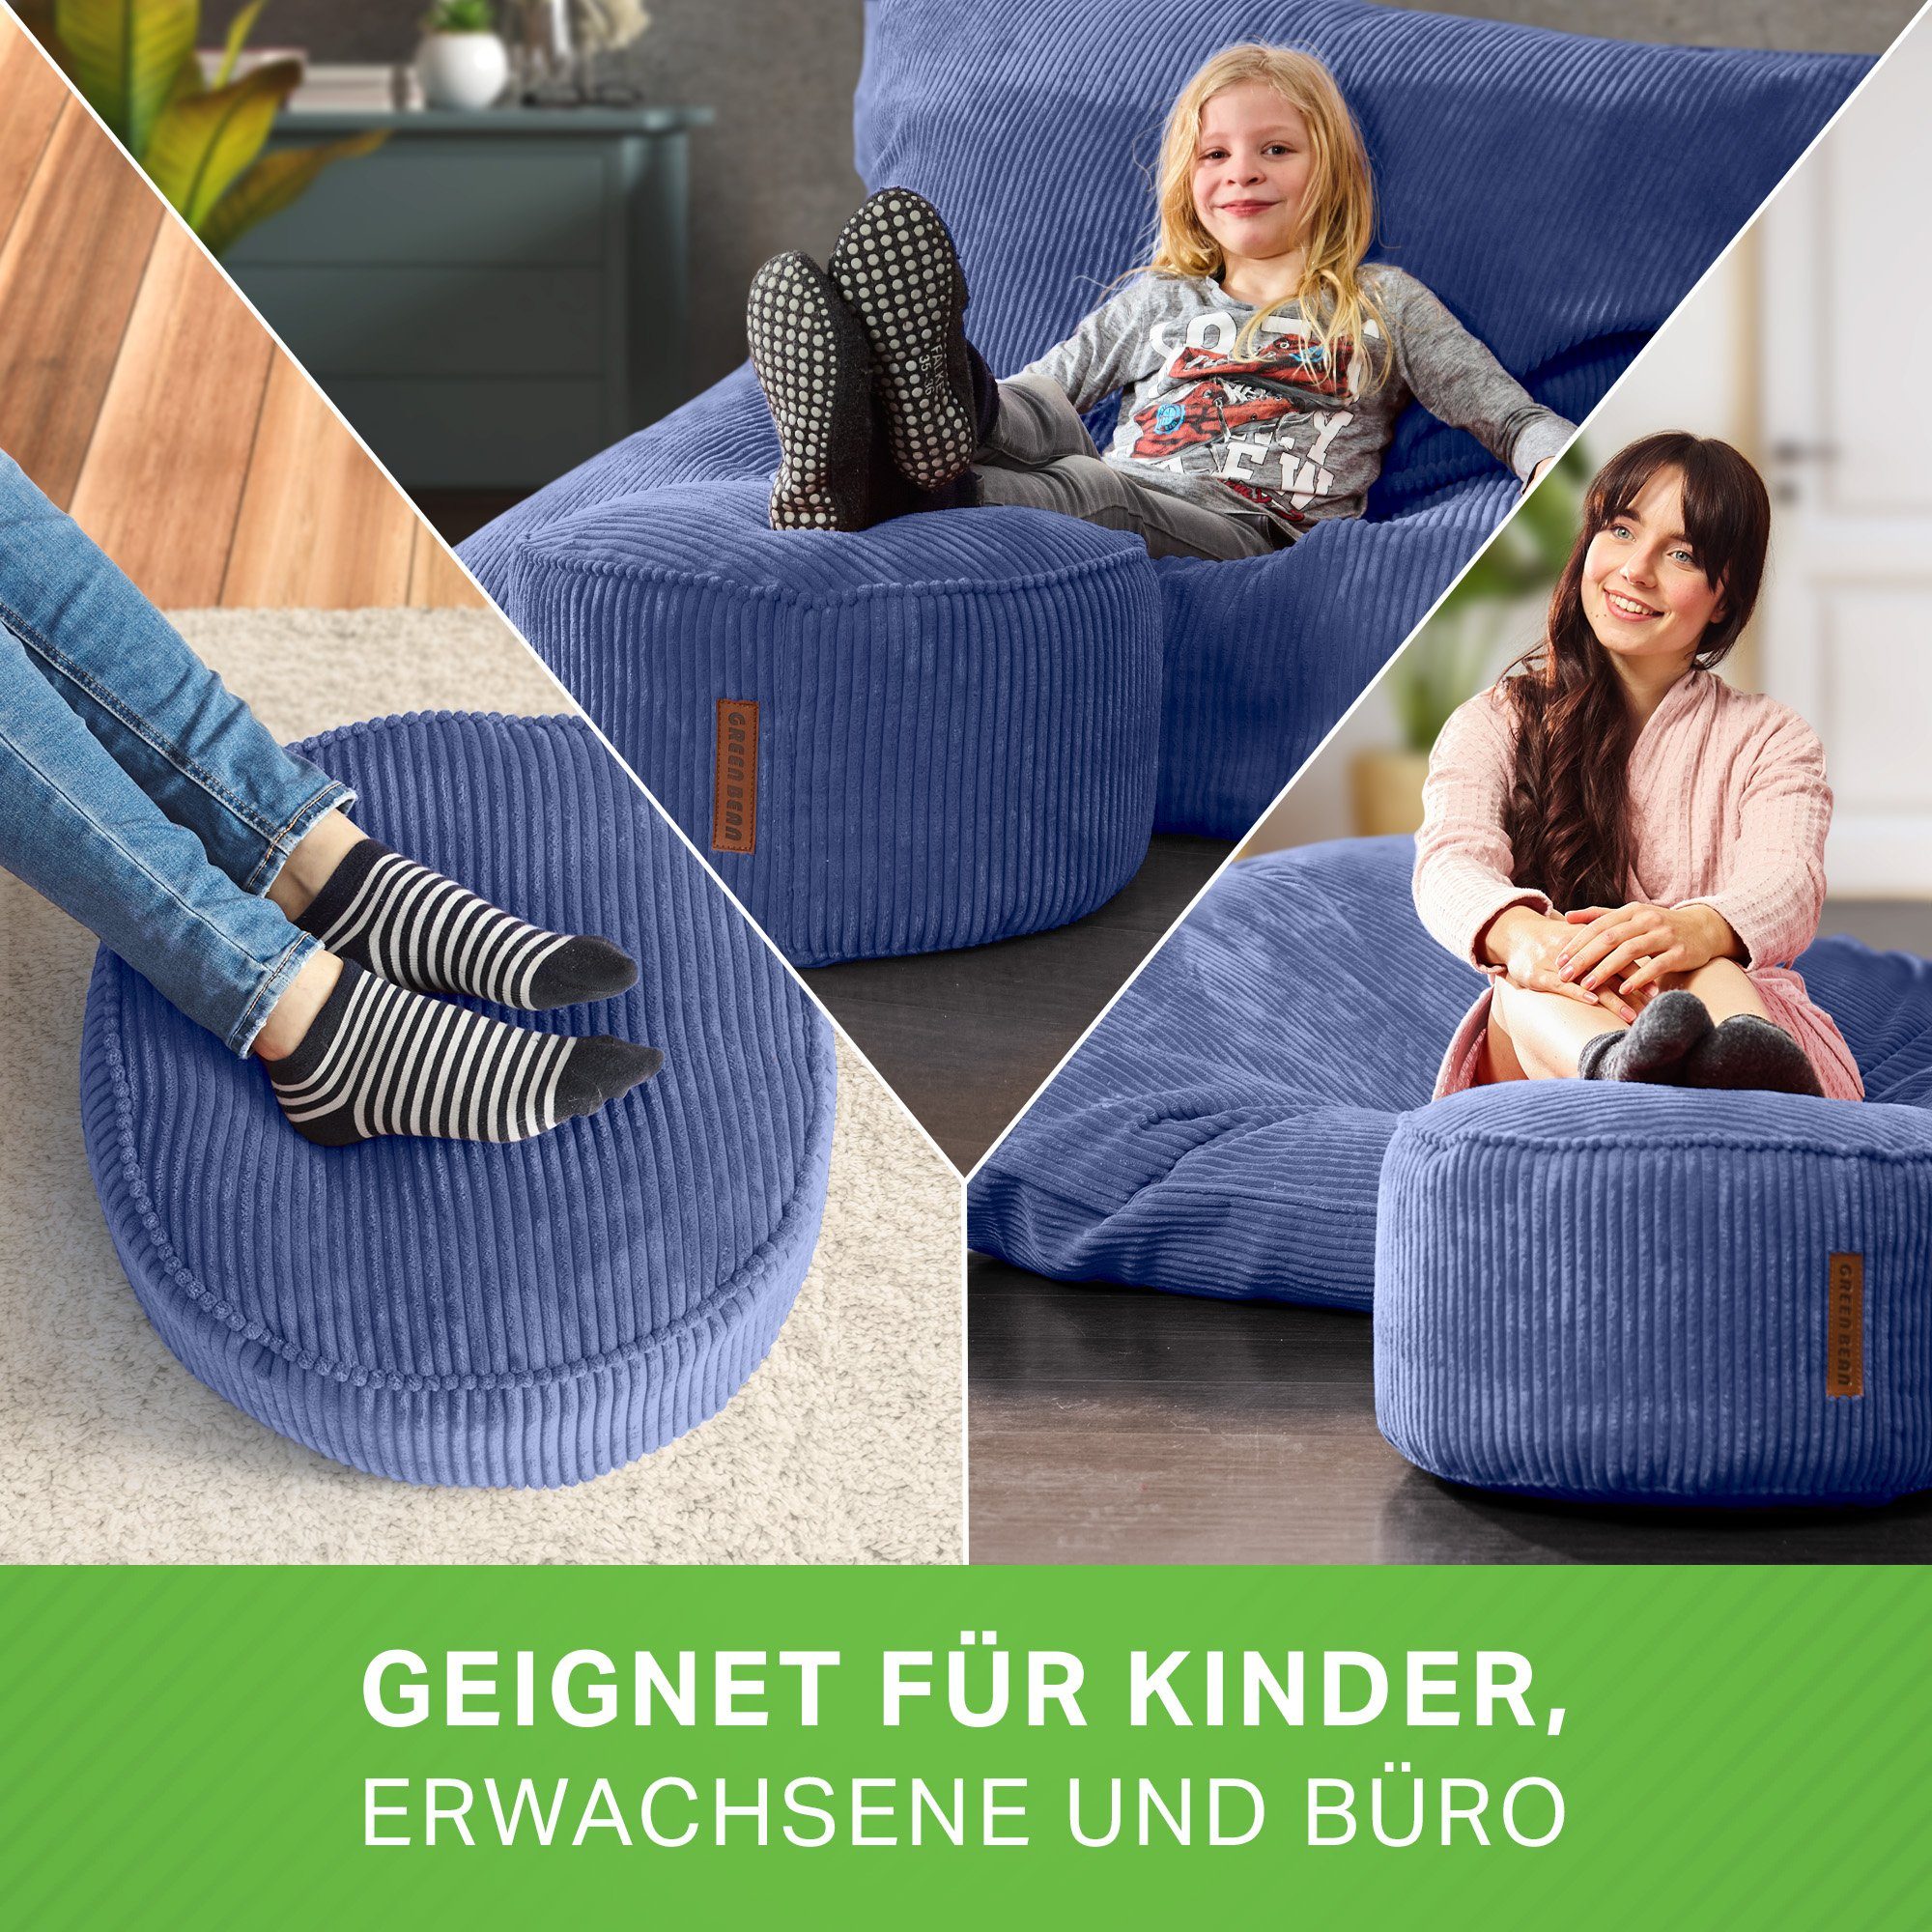 Indoor 25 cm, 45 Bean Cord x Relax-Sessel Sitzkissen Pouf Dunkelblau Sitzhocker Green Pouf Sitzhocker